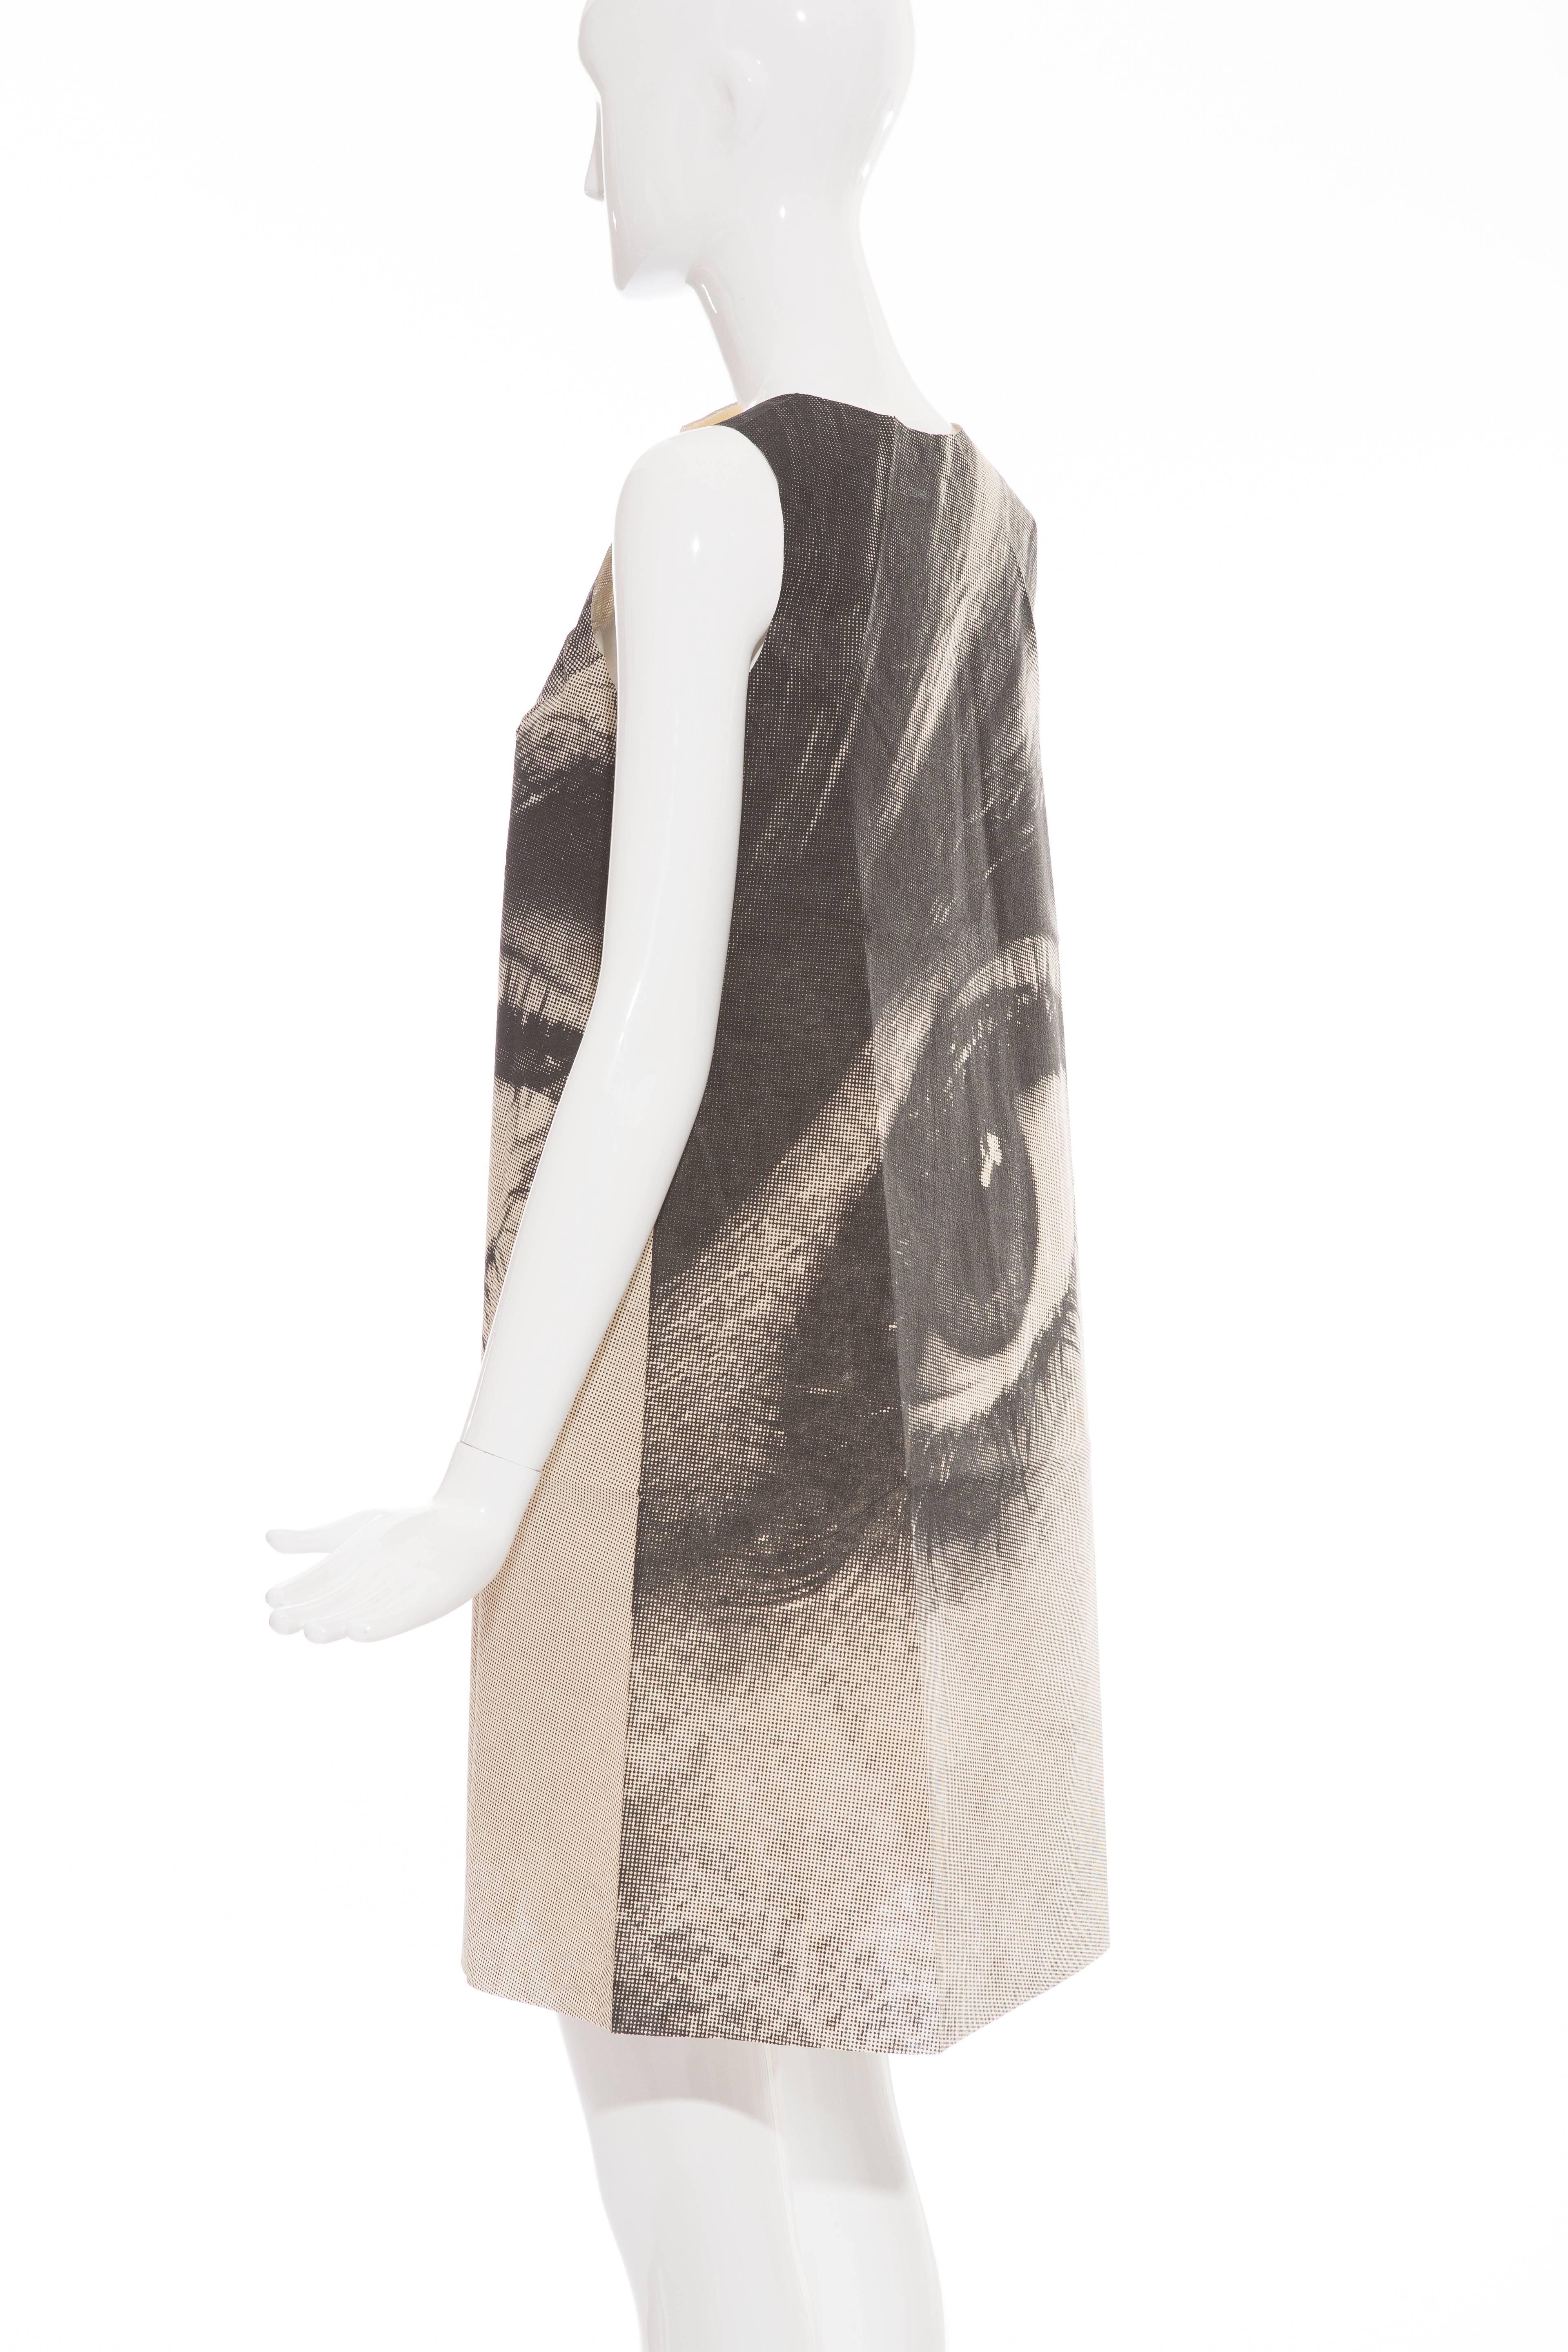 Women's London Series Paper Dress Designed by Harry Gordon Mystic Eye, Circa 1960's